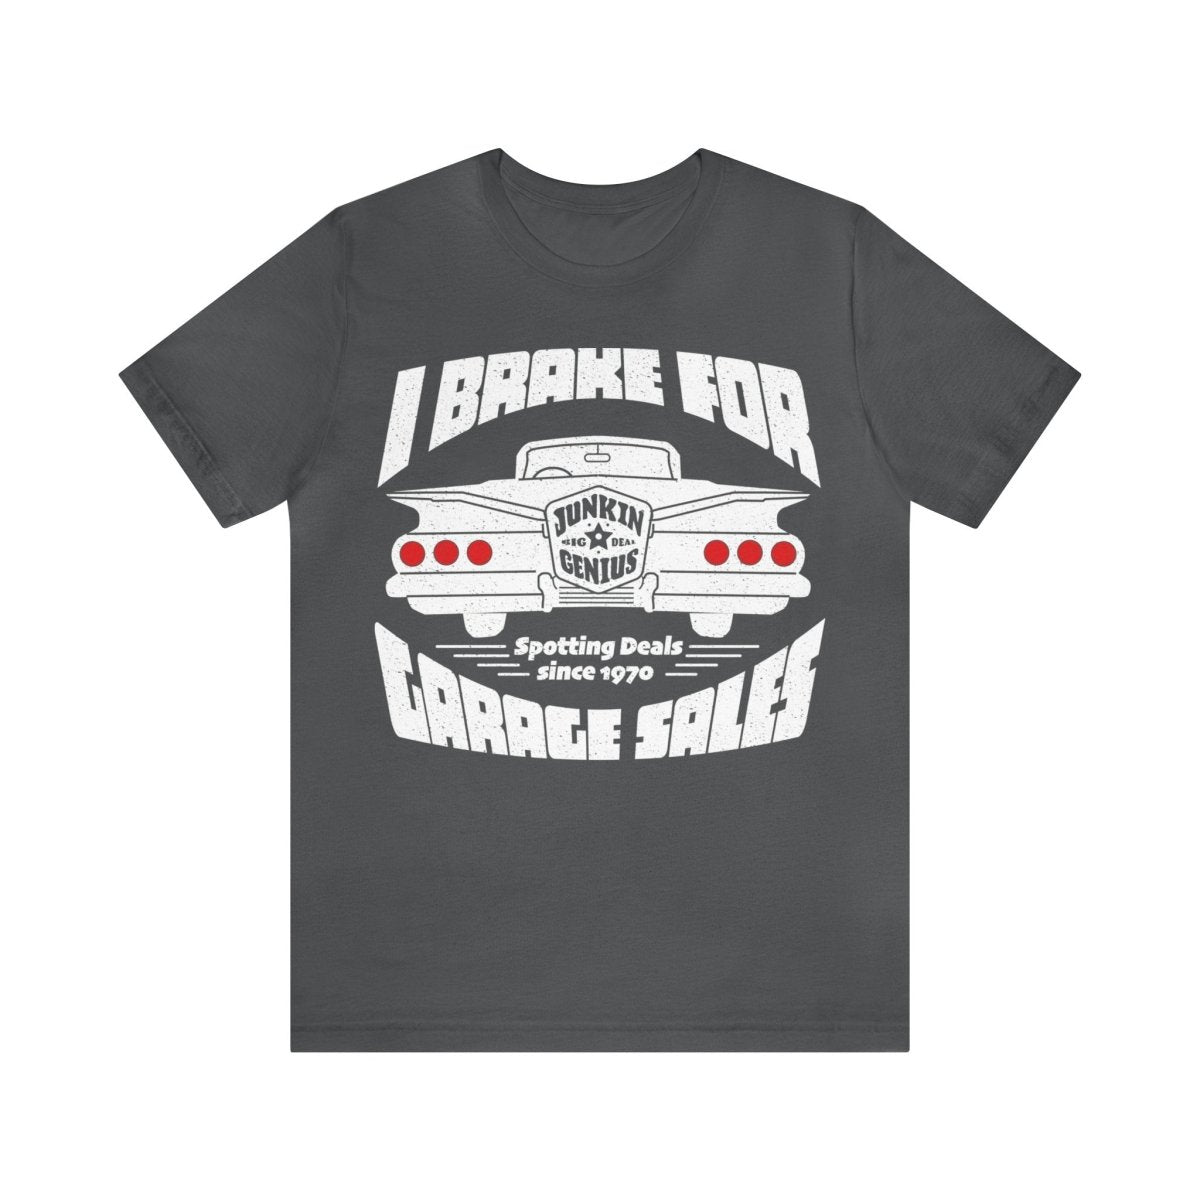 Garage Sale Brakes Premium T-Shirt, Flea Markets, Thrift Stores, Antiques, Used Goods, Junkin' Genius